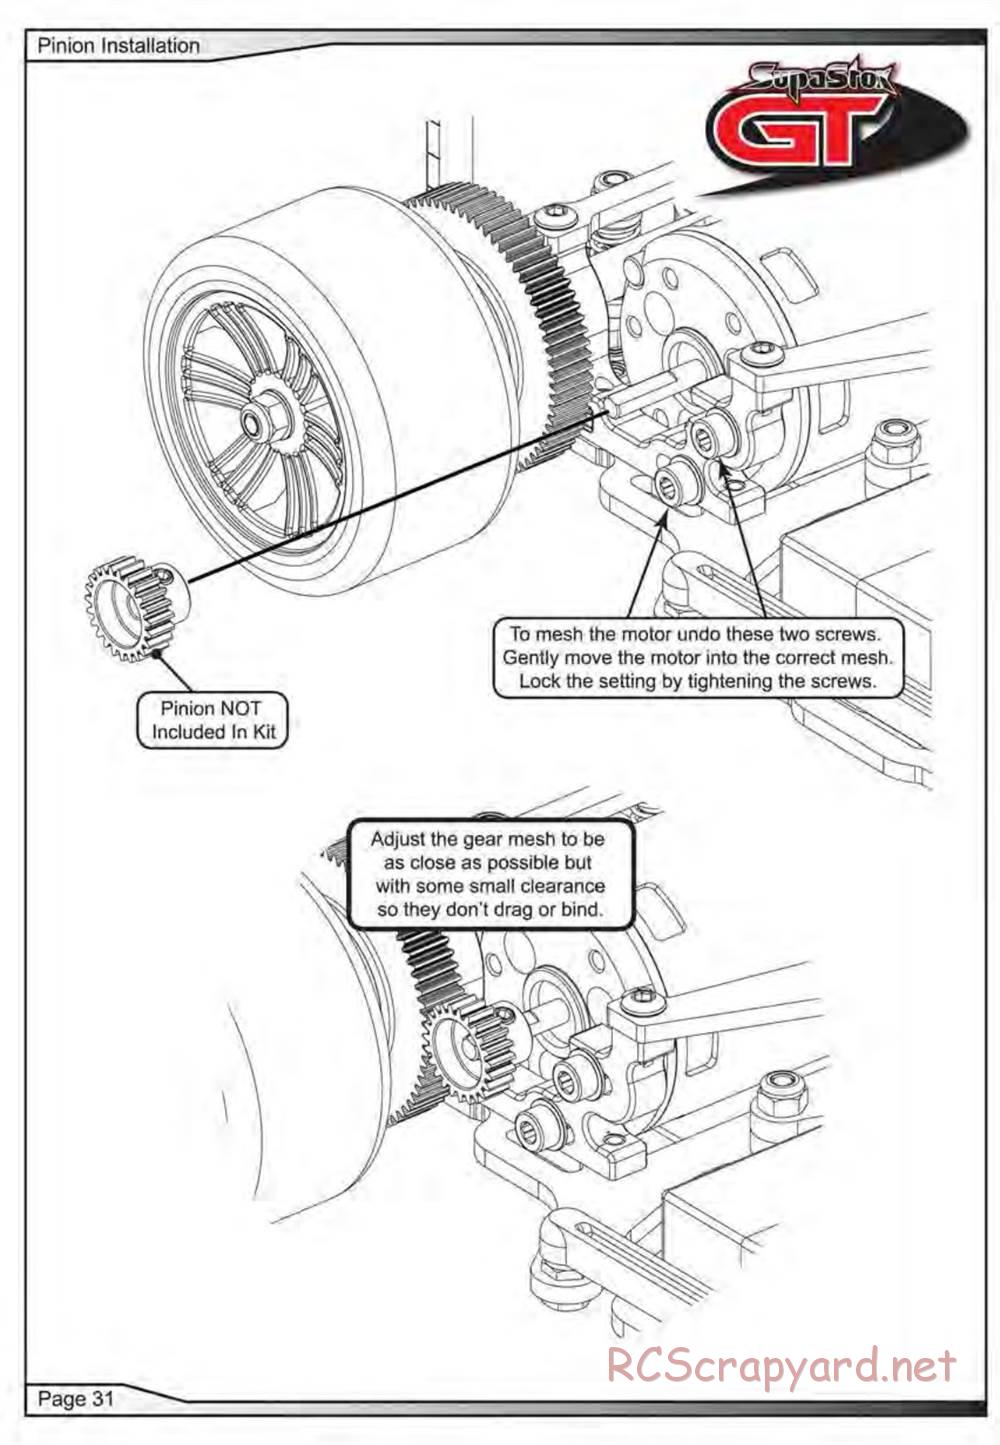 Schumacher - SupaStox GT - Manual - Page 32